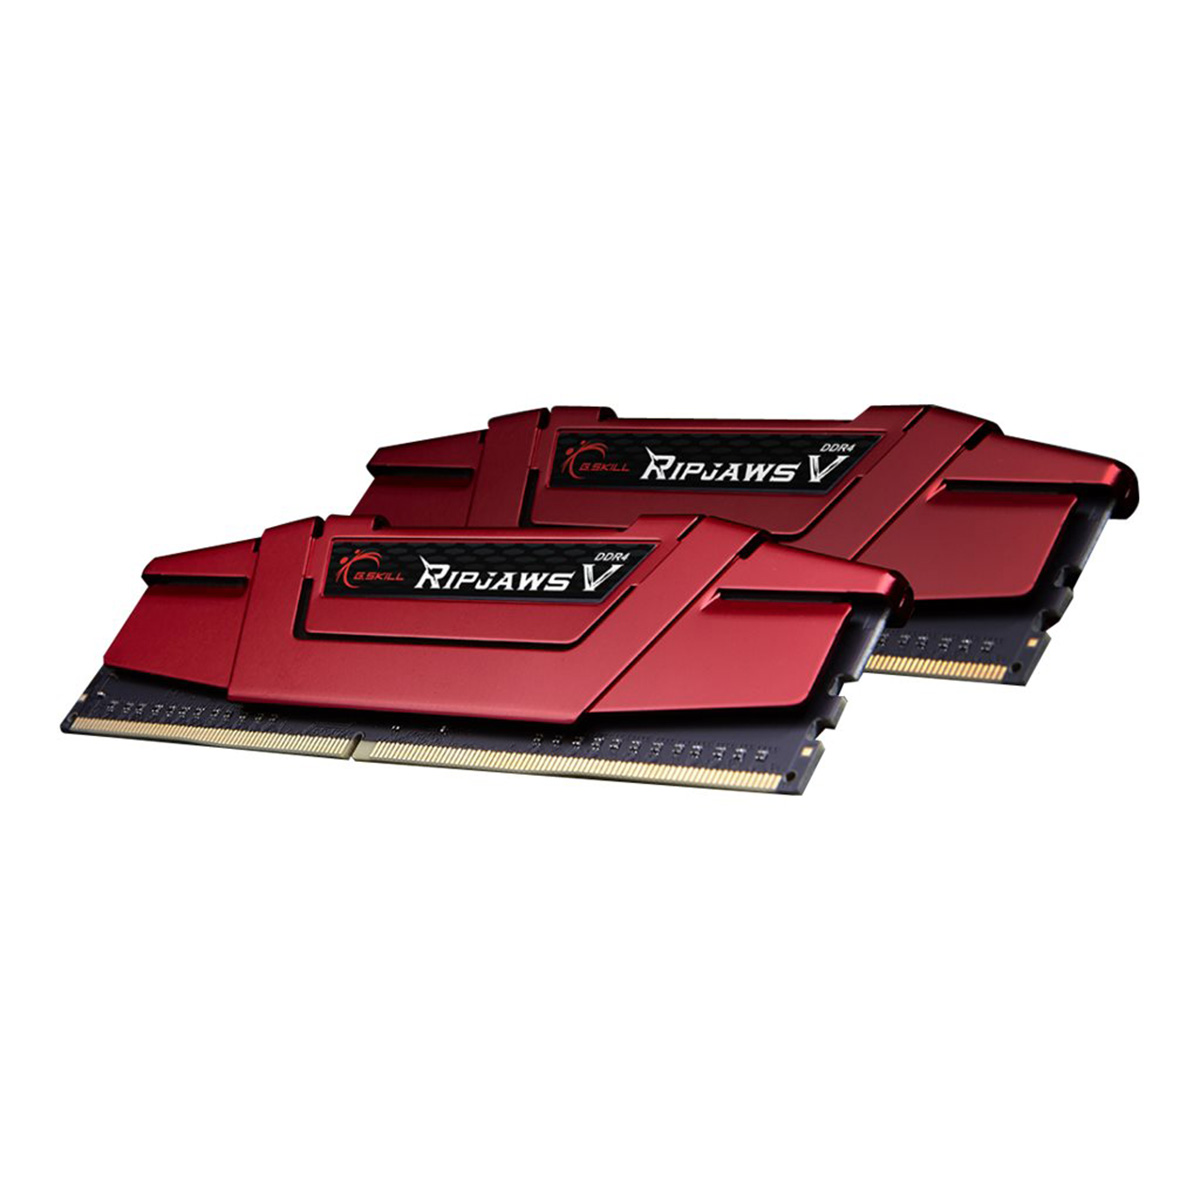 16 GB DDR4 red,16 G.SKILL 2x8GB;1,25V,RipjawsV Speicher-Kit